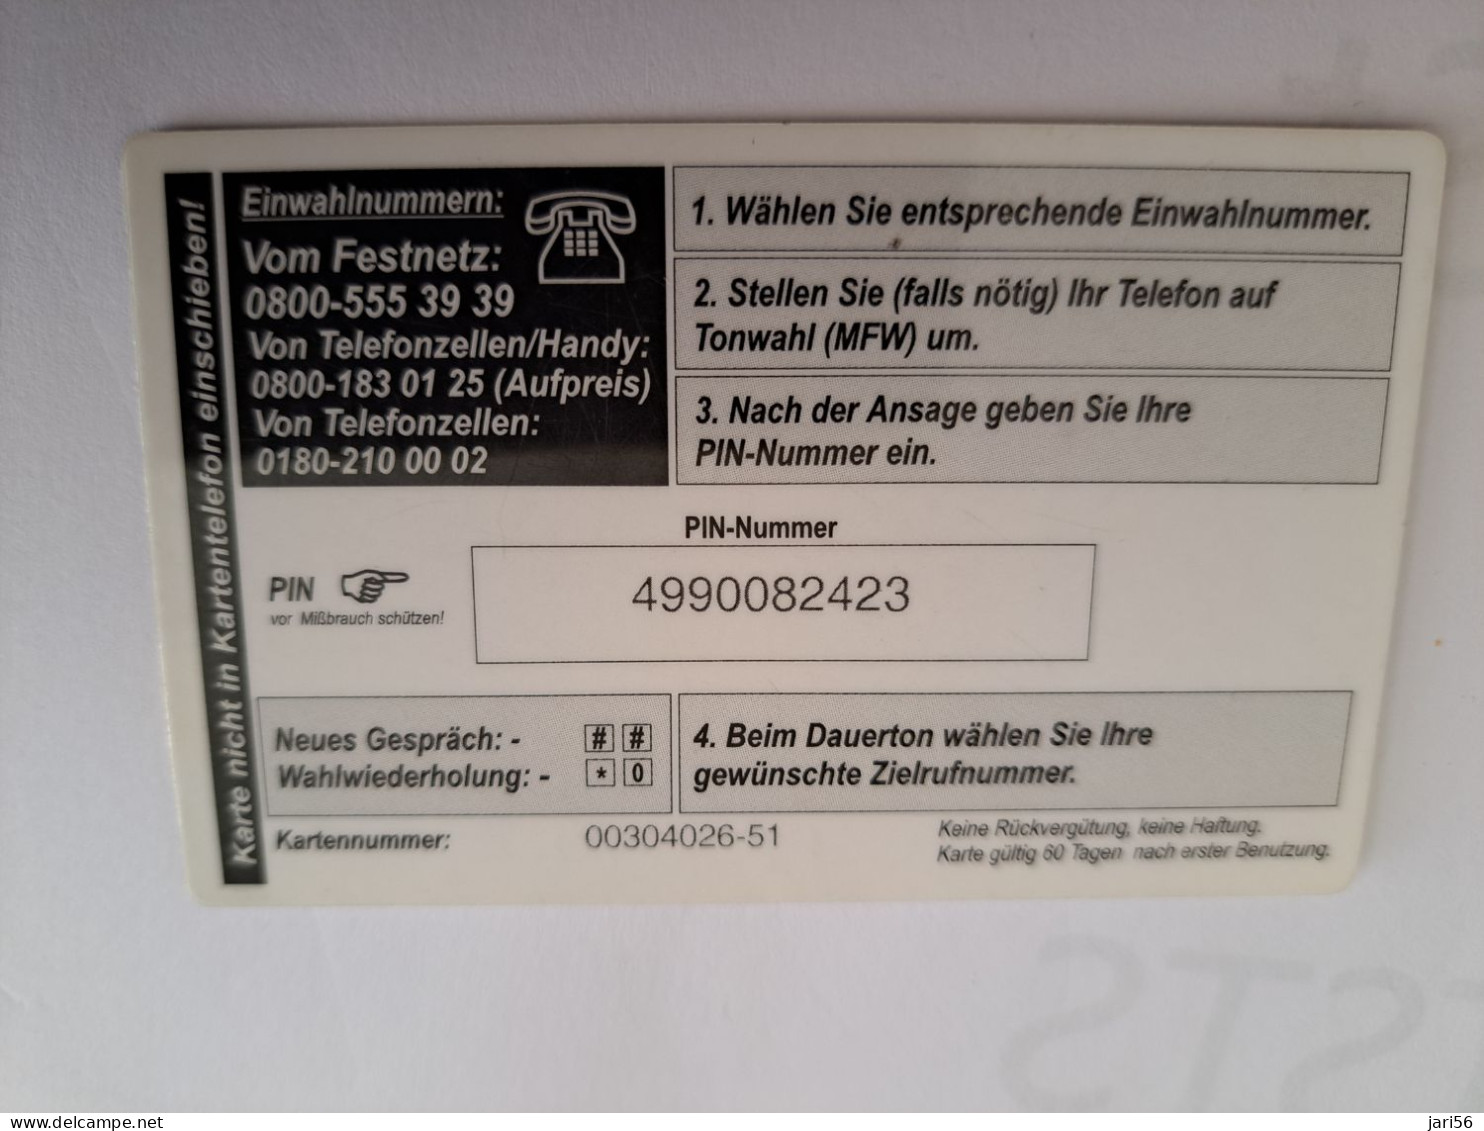 DUITSLAND/GERMANY  € 5,- / TELE MONEY/ BANKNOTES & COINS ON CARD        Fine Used  PREPAID  **16528** - GSM, Cartes Prepayées & Recharges